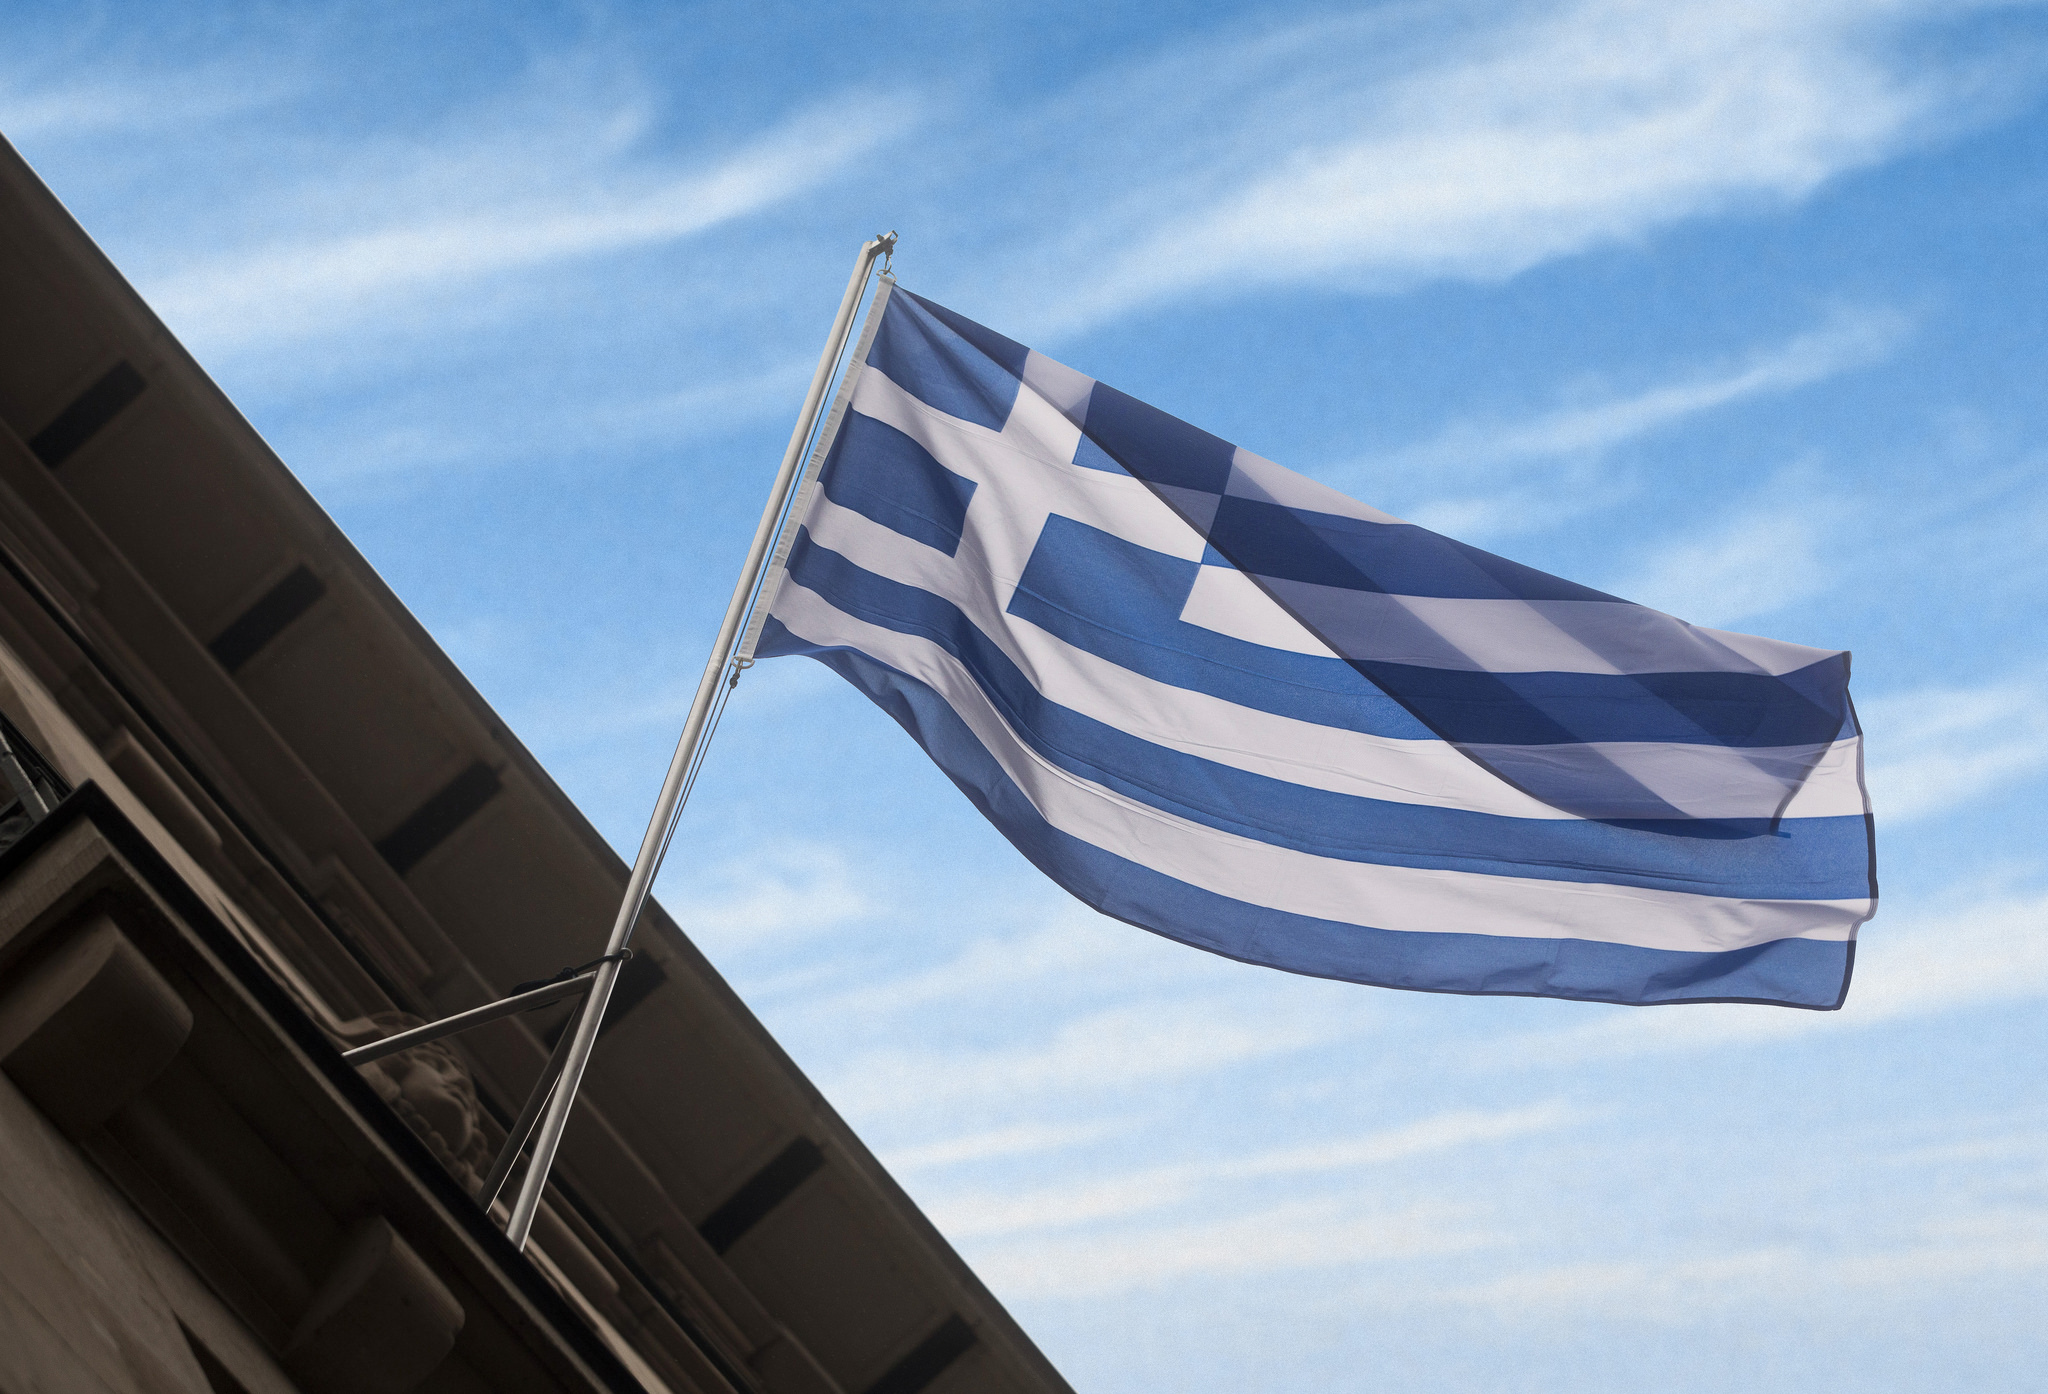 Grexit μέσα στην επόμενη τριετία 